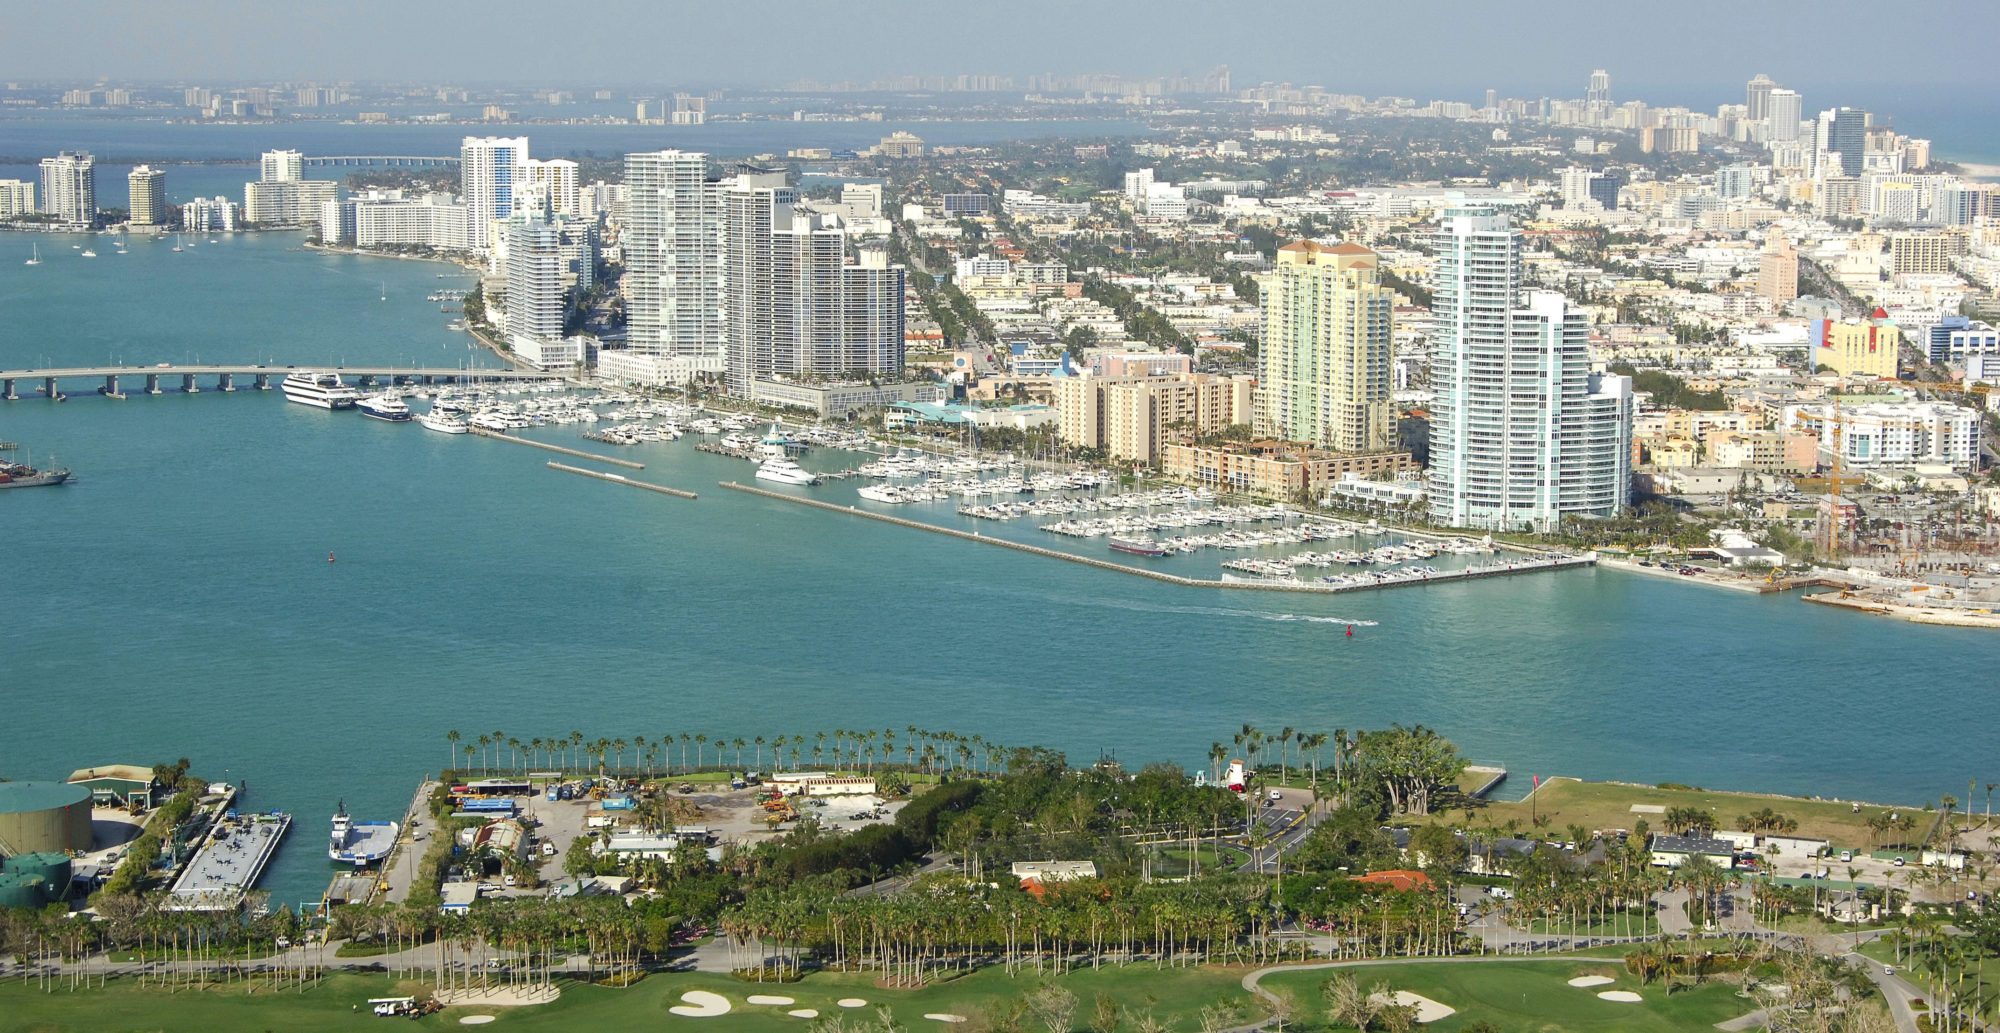 Alquileres en Miami disminuyeron 0.3% en agosto